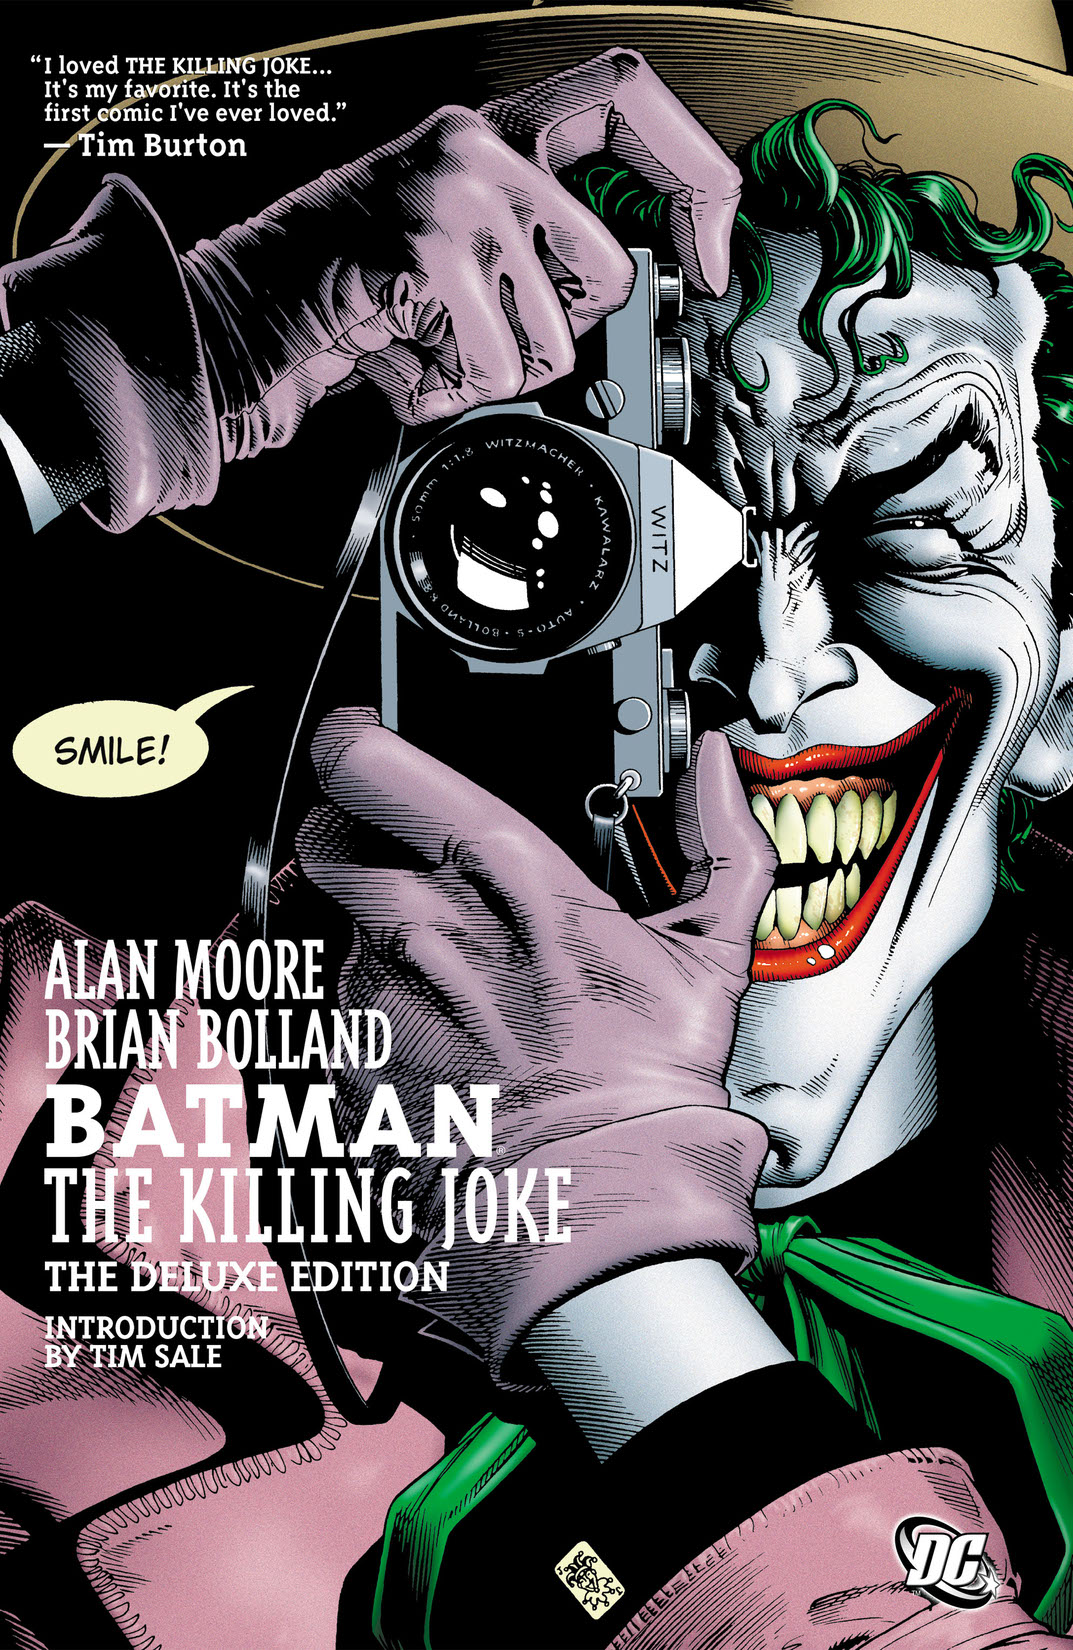 Batman The Killing Joke Deluxe preview images